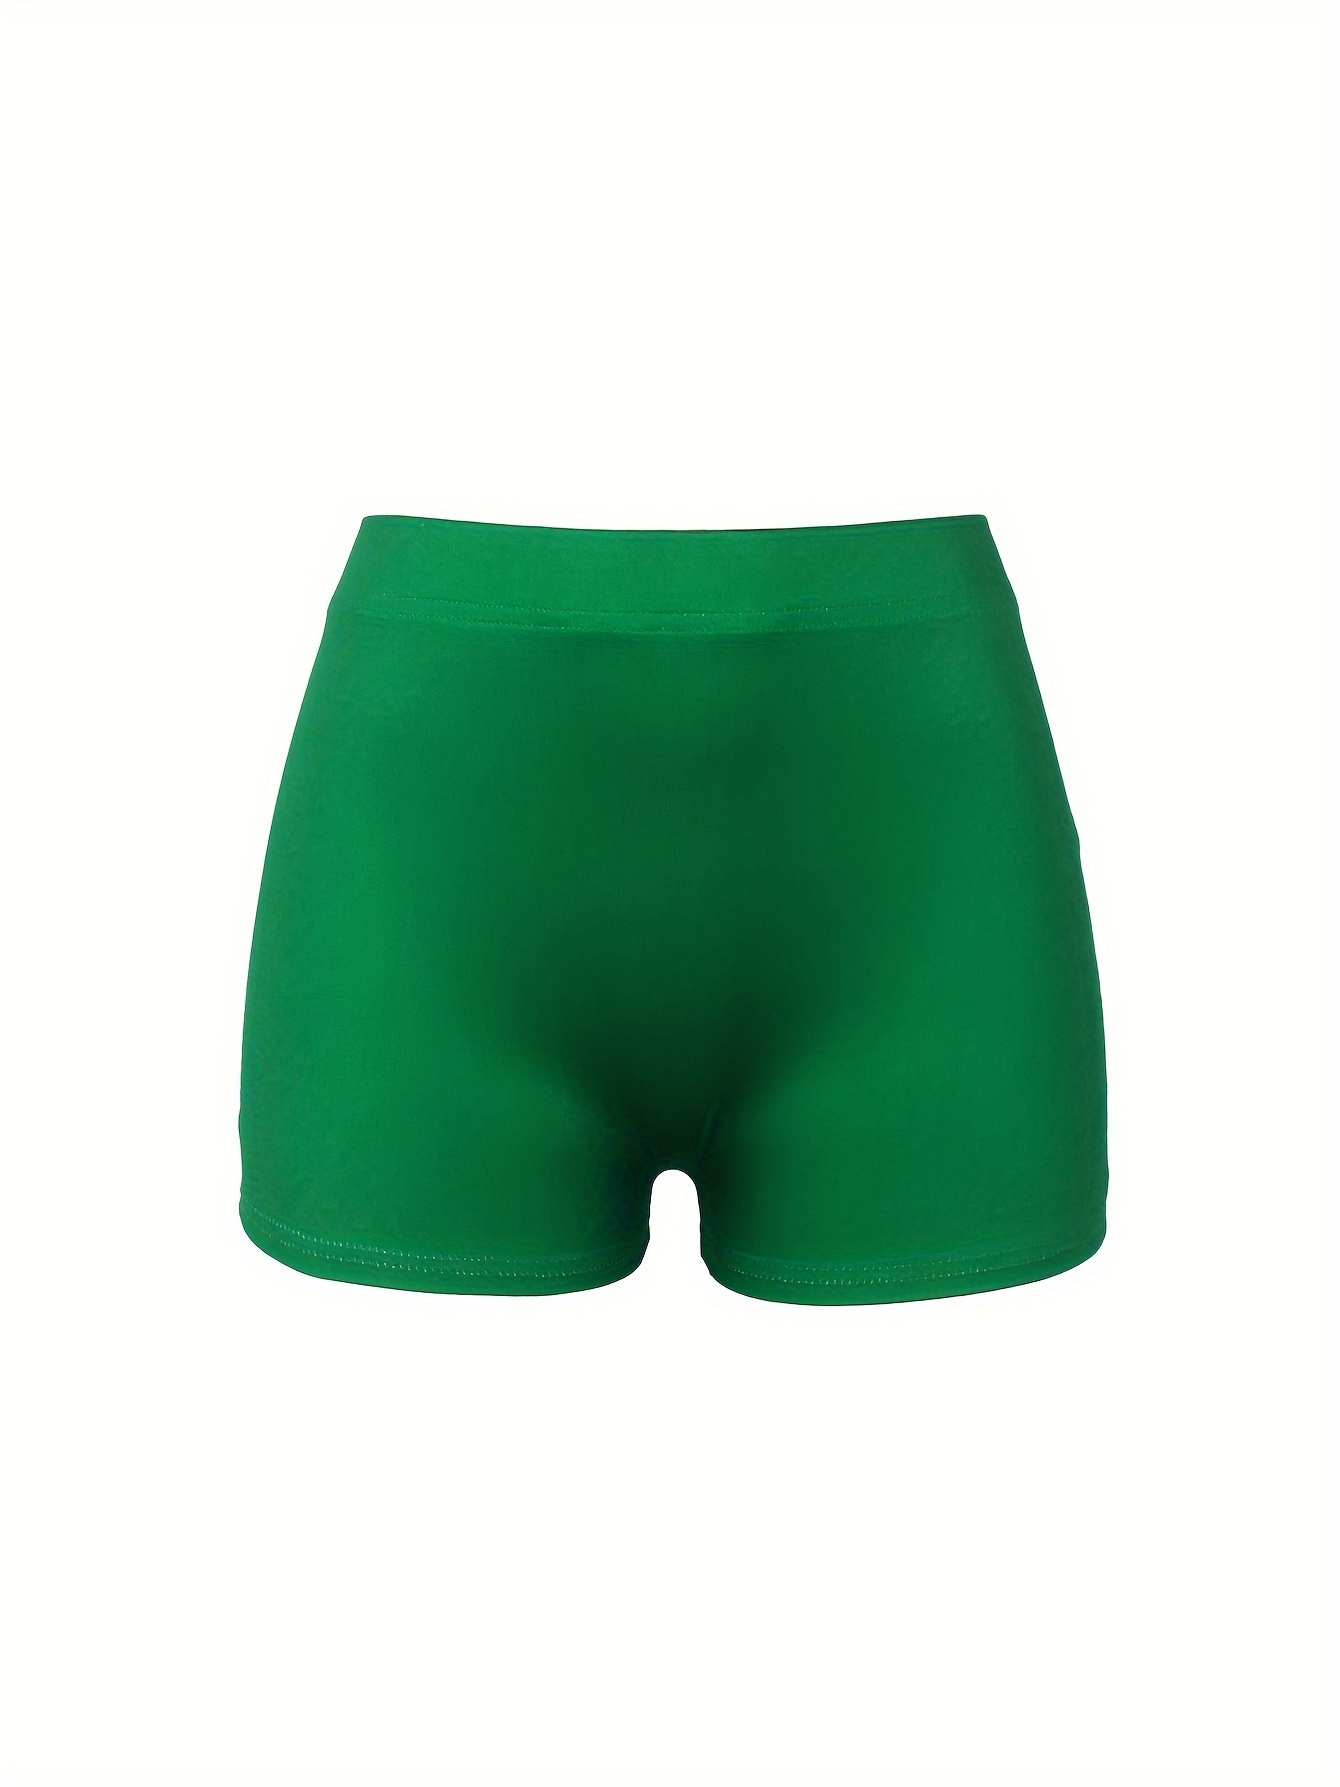 Finelylove Spandex Shorts Women Under Dress Flowy Shorts Jean High Waist  Rise Solid Army Green S